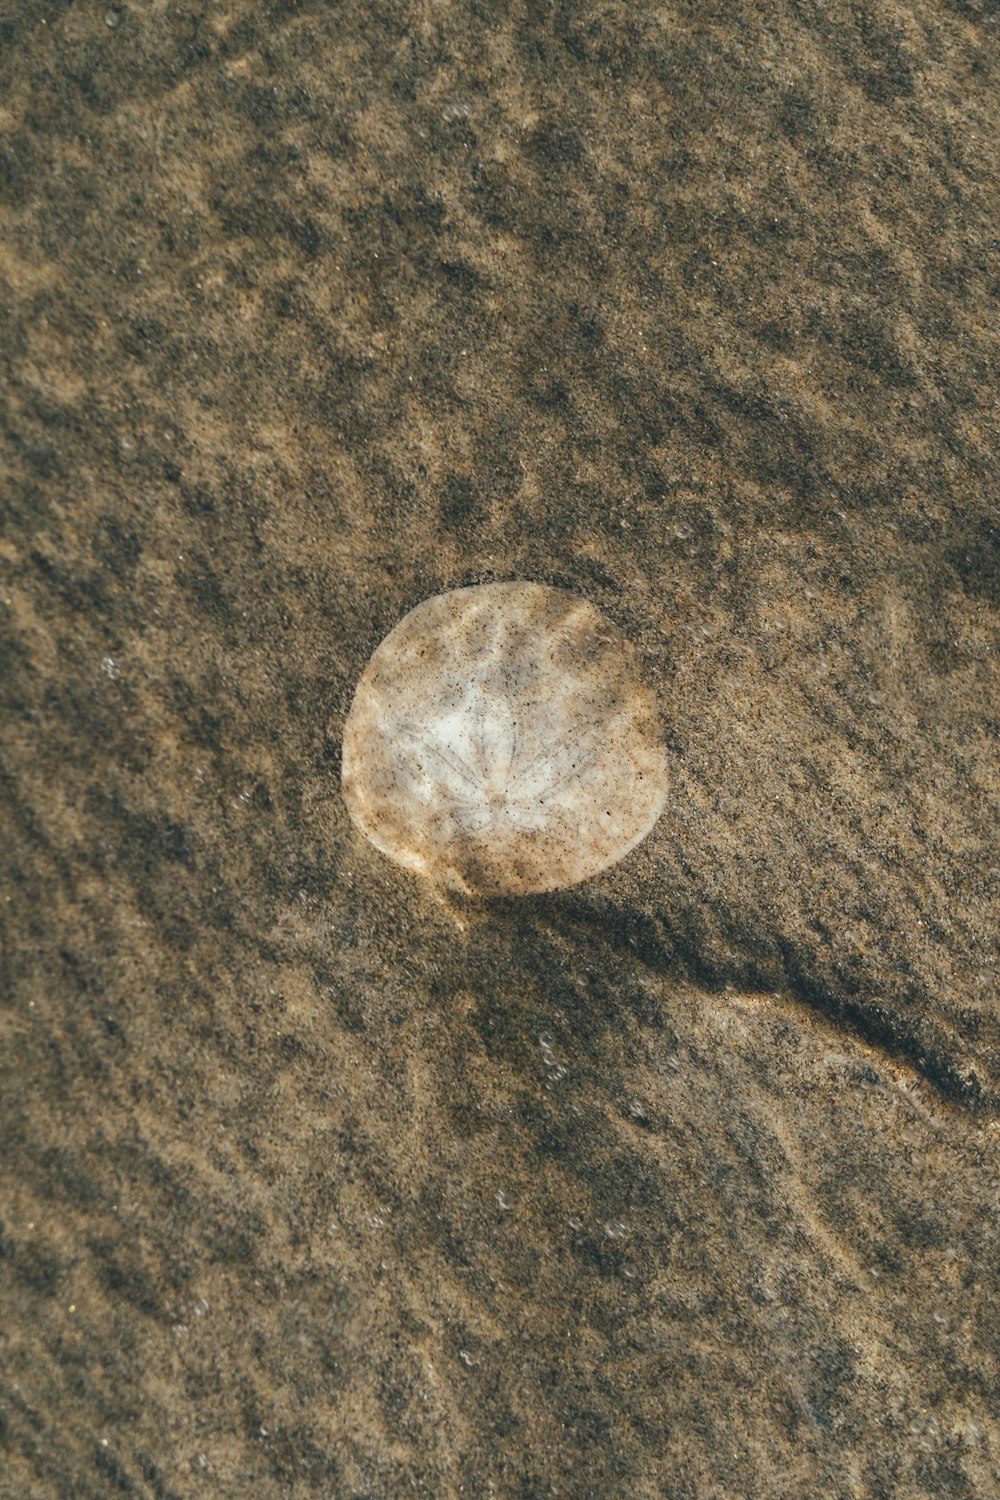 una roca sentada en la cima de una playa de arena